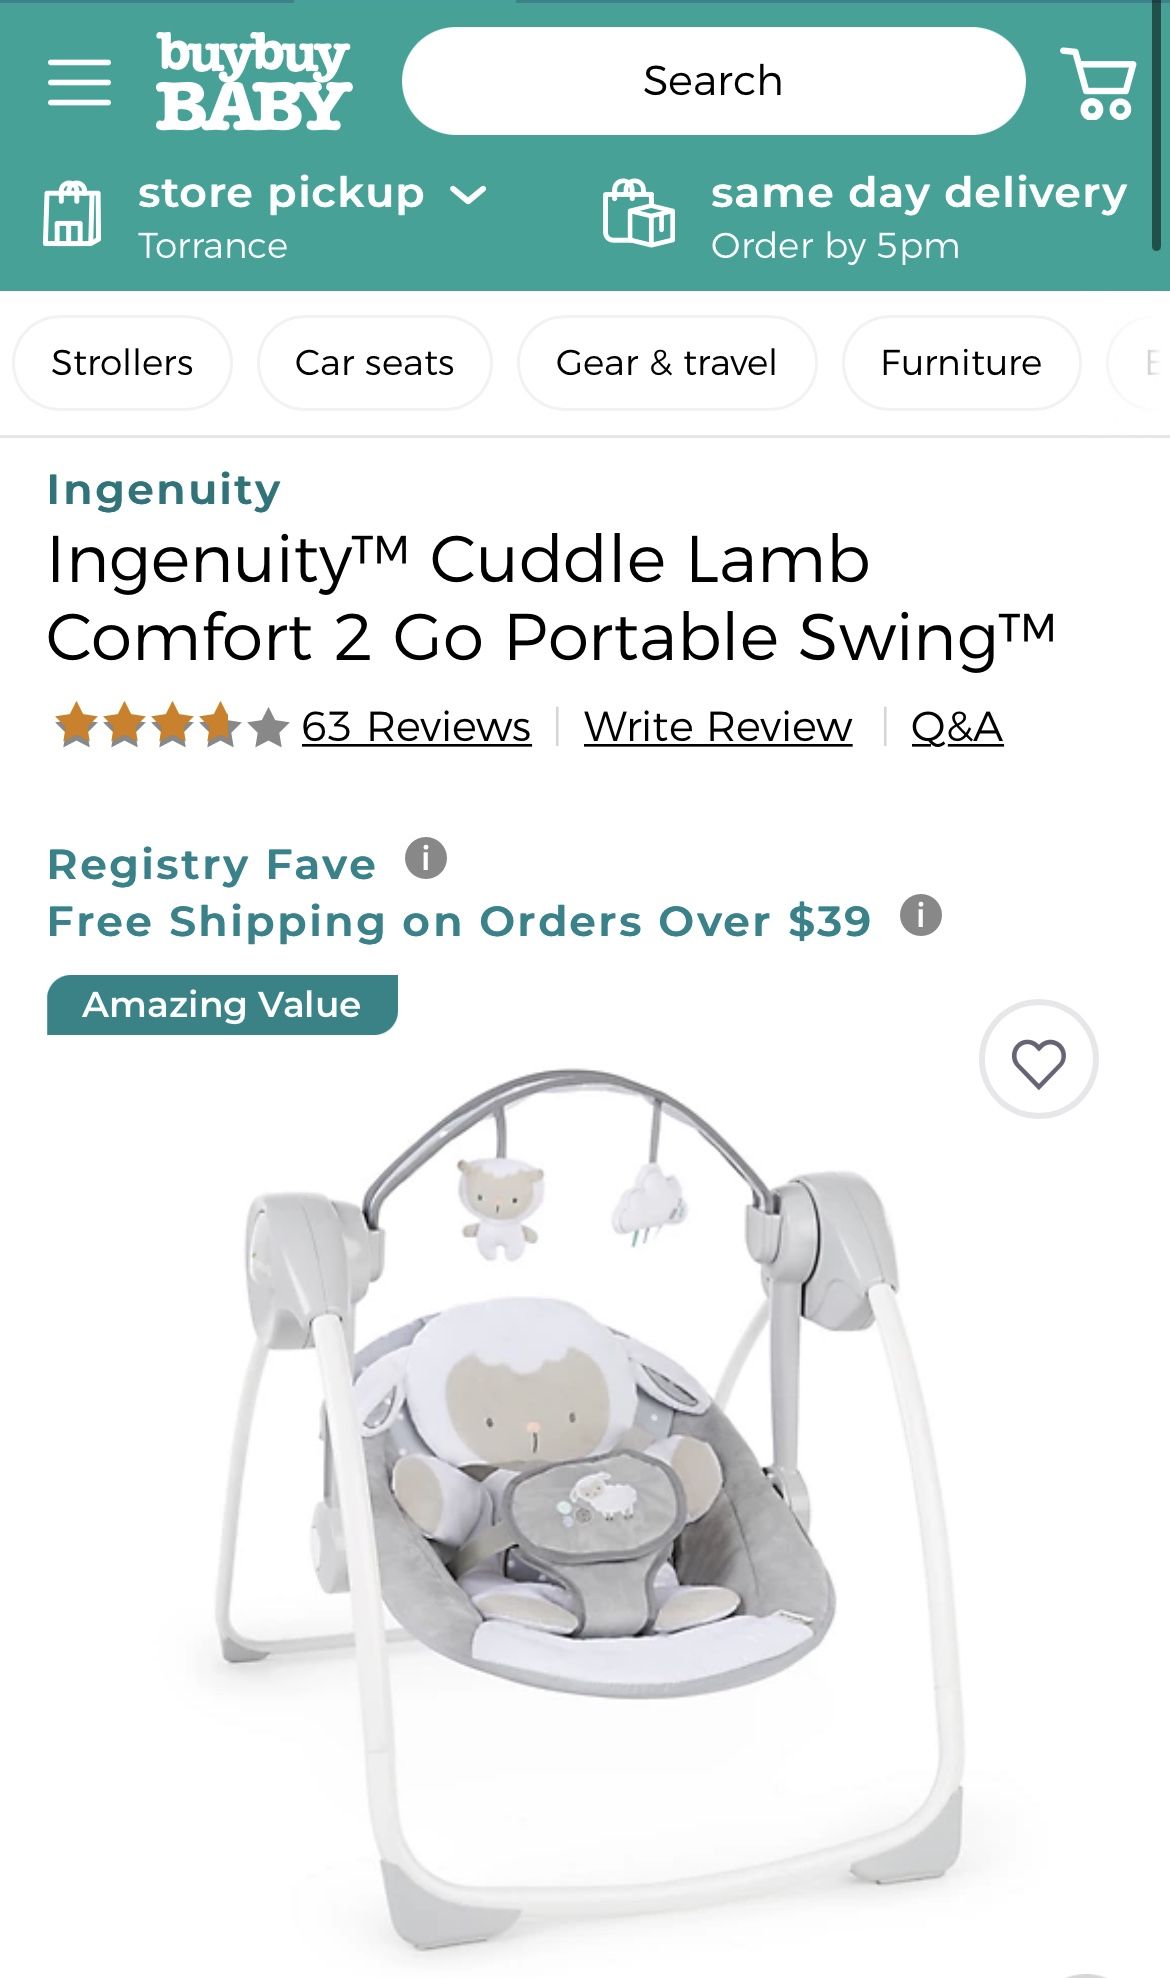 Ingenuity Cuddle Lamb Comfort 2 Go Portable Swing™